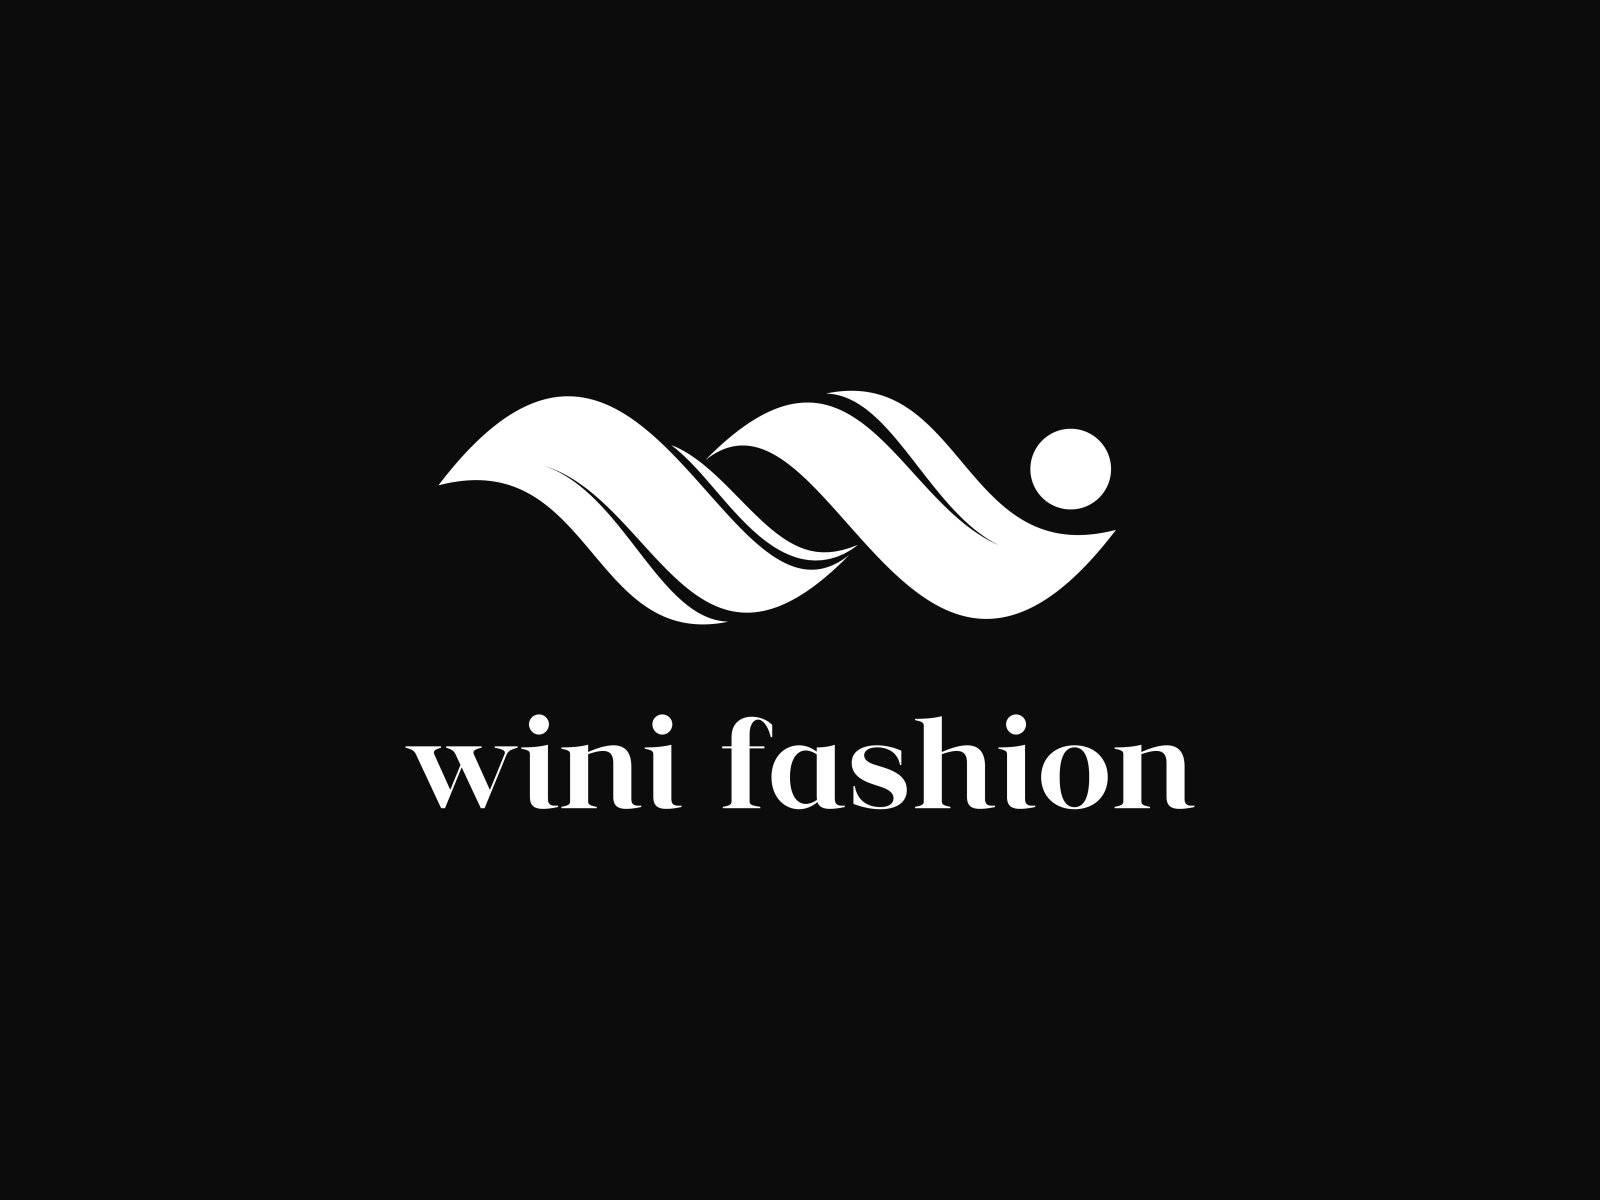 Wini fashion Brand Logo design by Touhid | Logo Designer on Dribbble